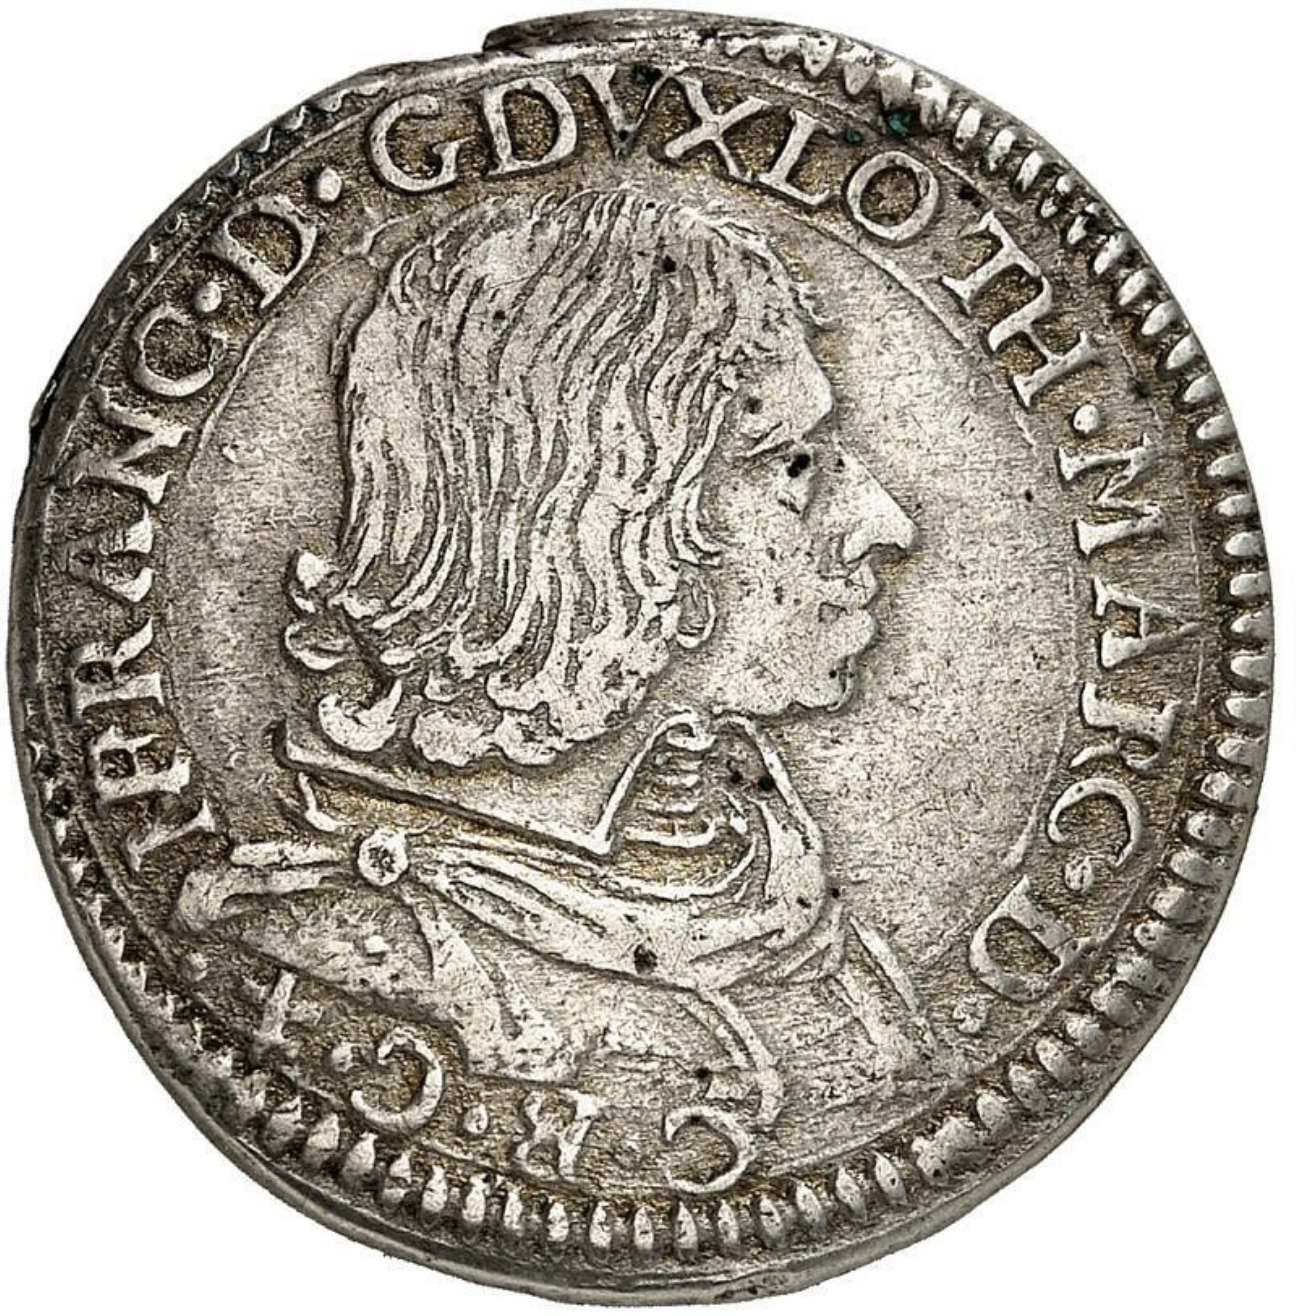 1635 Monnaies lorraine duche de lorraine nicolas francois 1635 teston 1635 florence 135913a